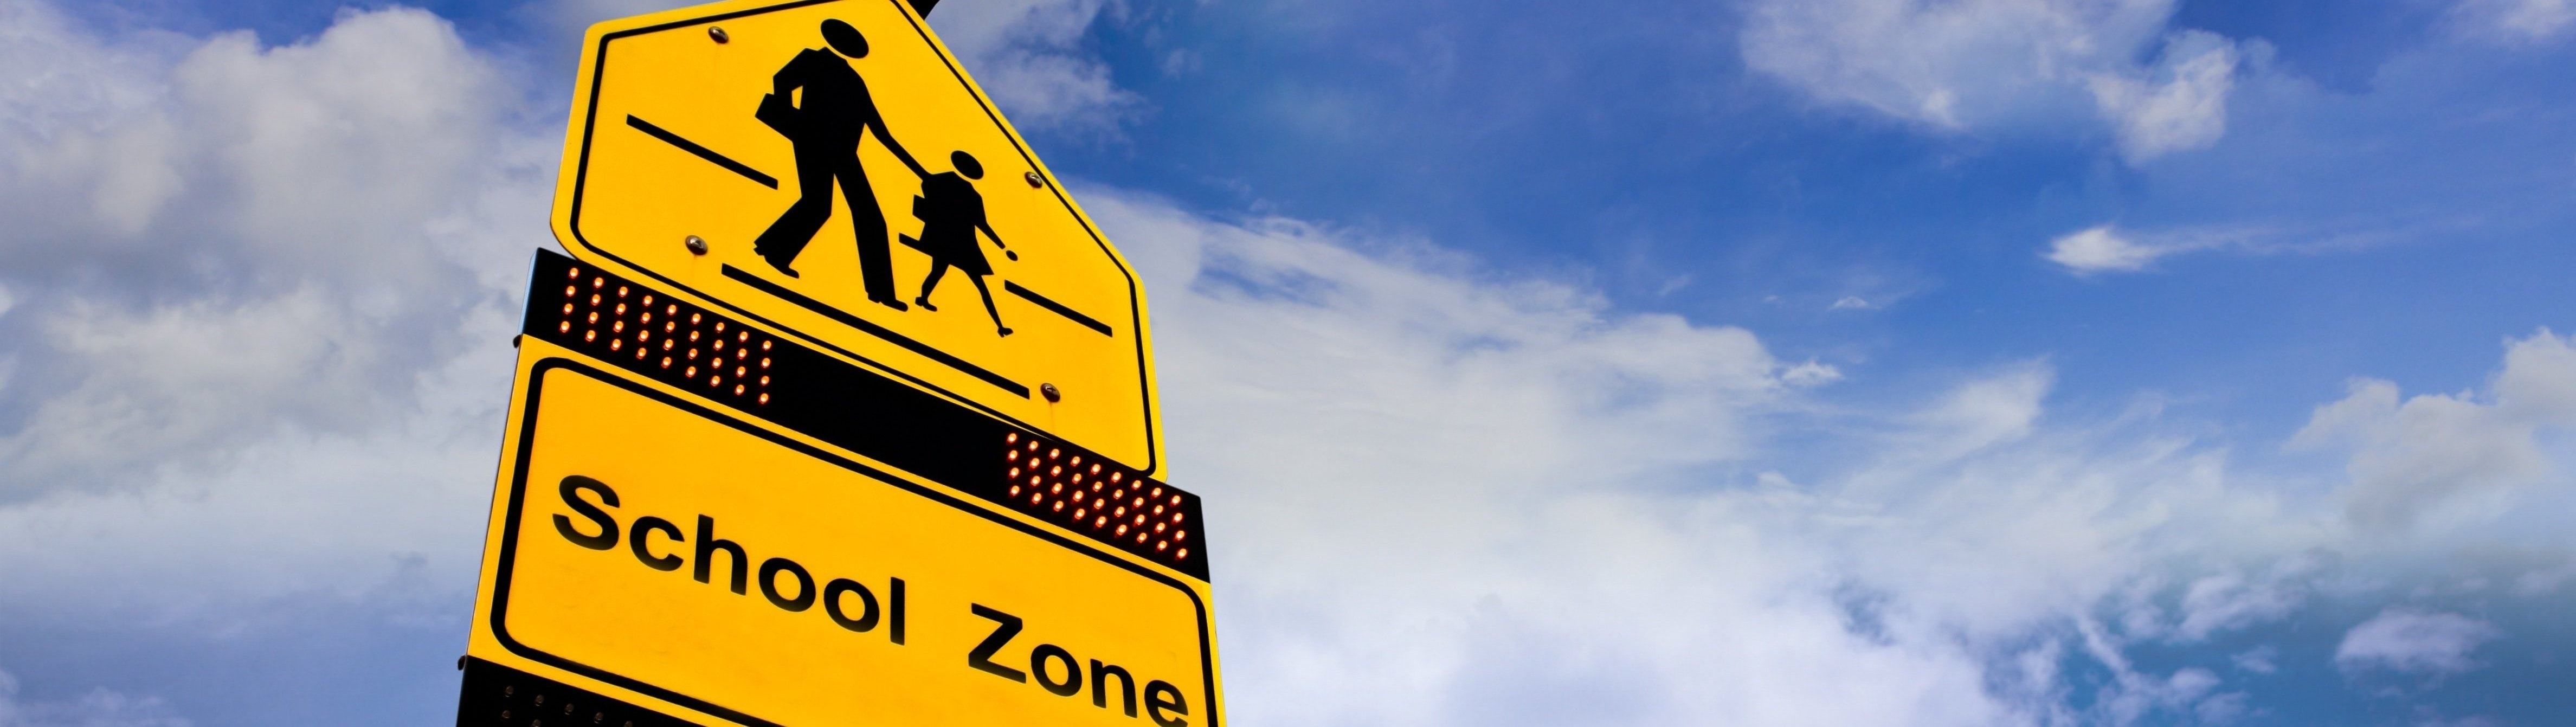 school zone safety sign